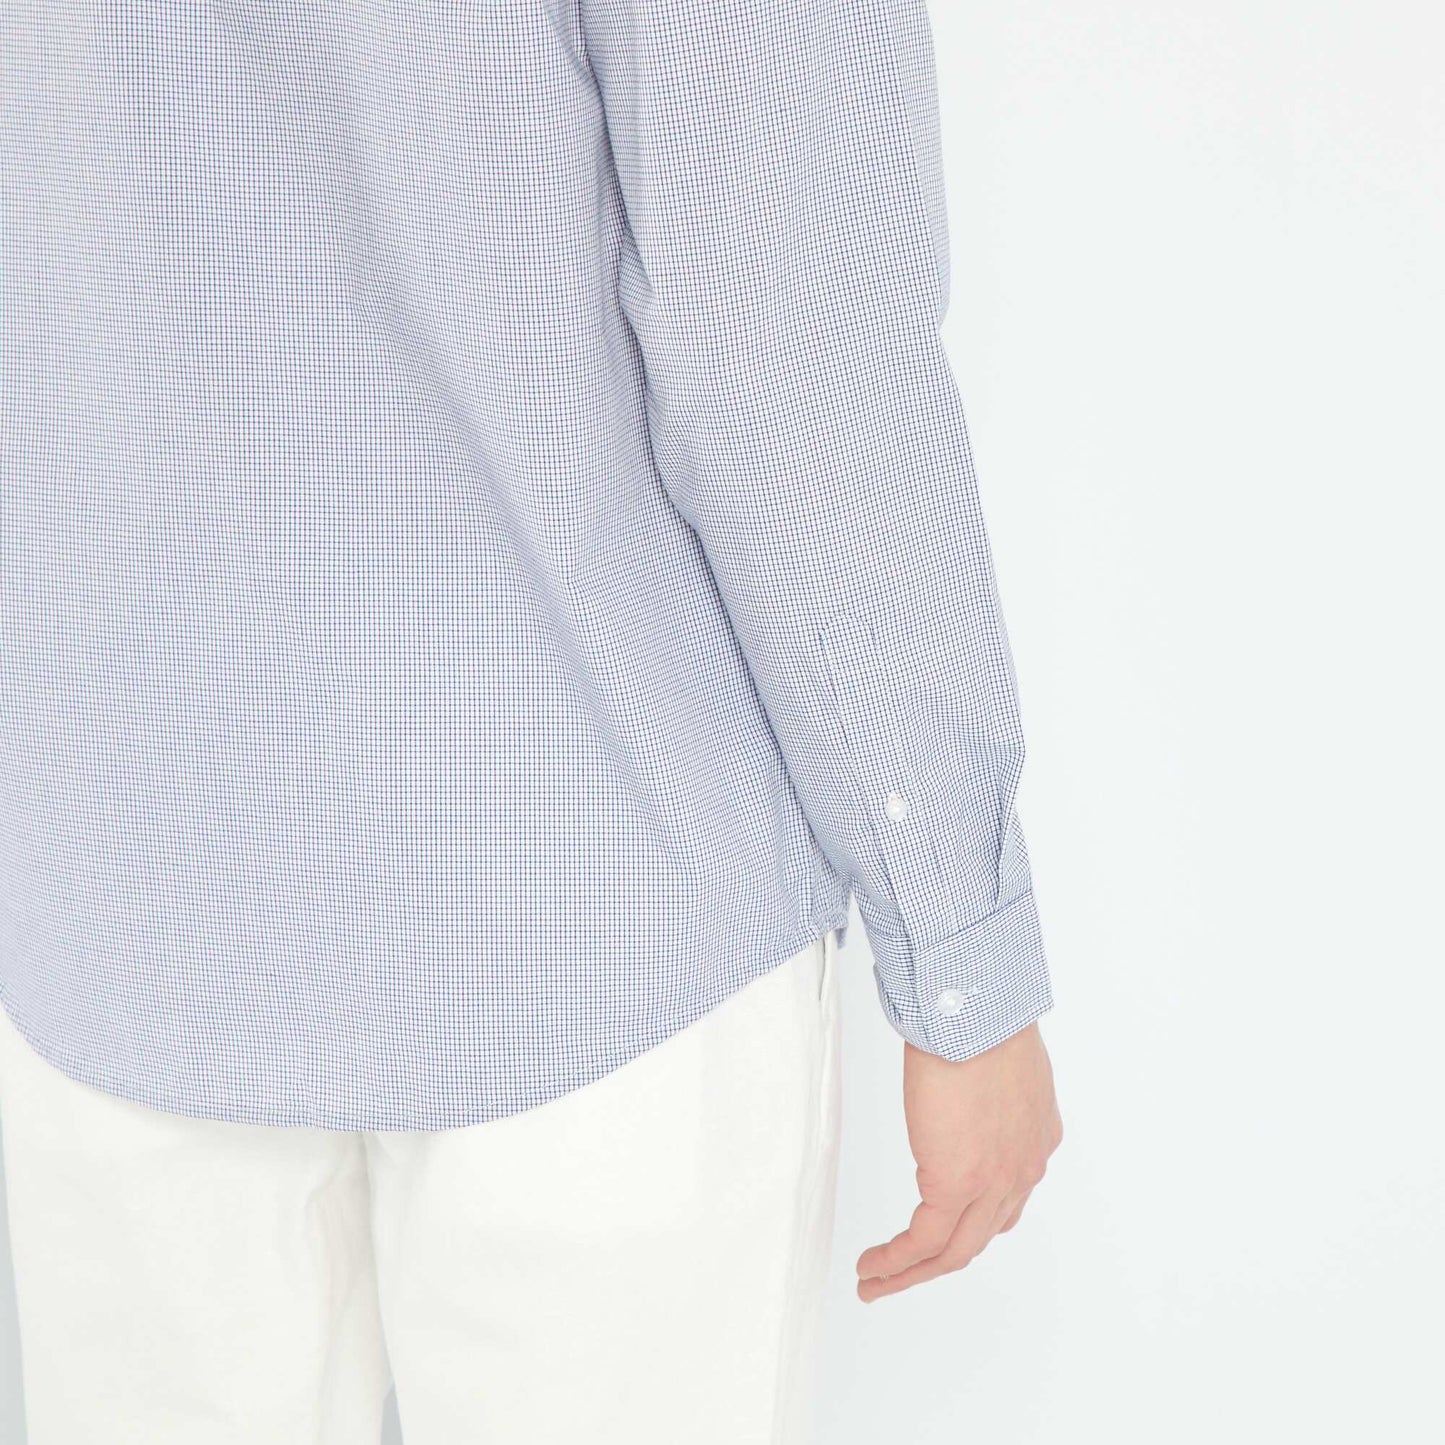 Chemise droite carreaux Blanc/bleu marine